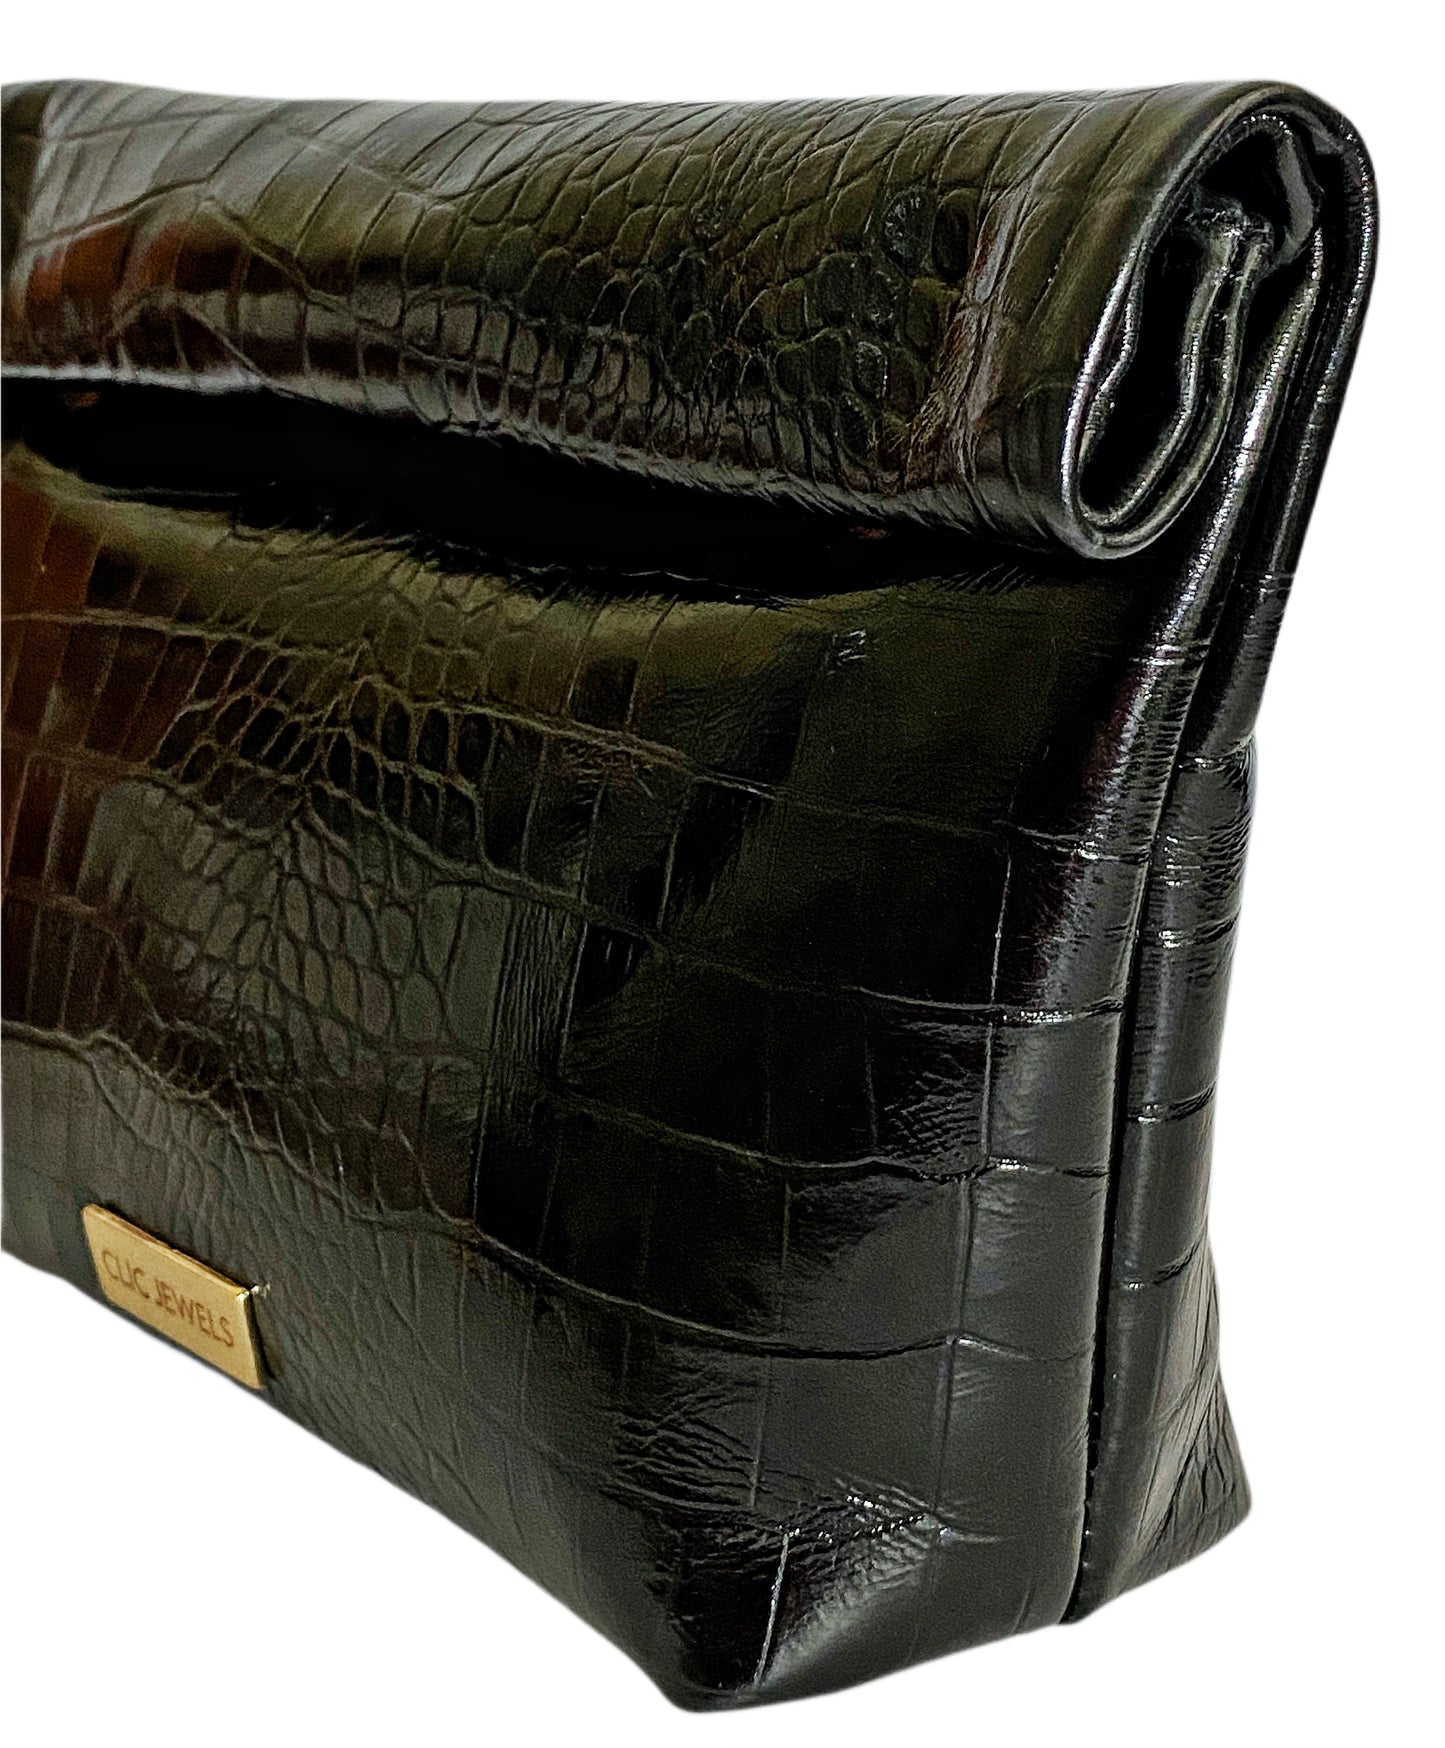 ALEX LUNCHBAG (black croco genuine leather)